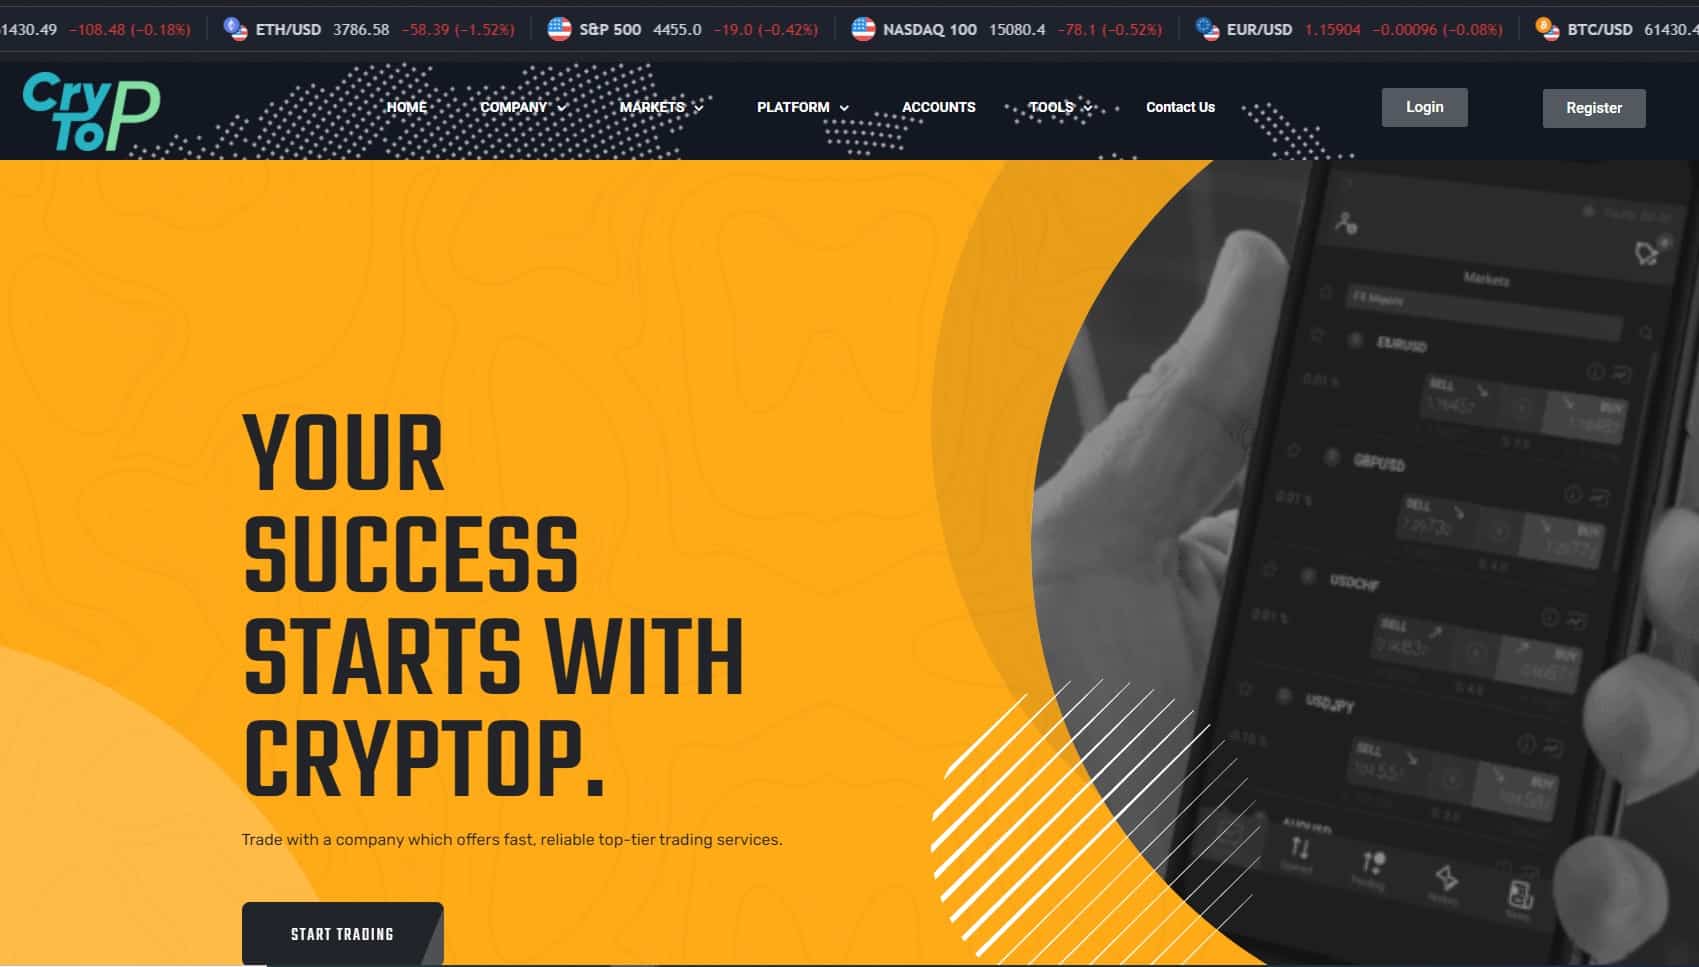 Cryptop.io website